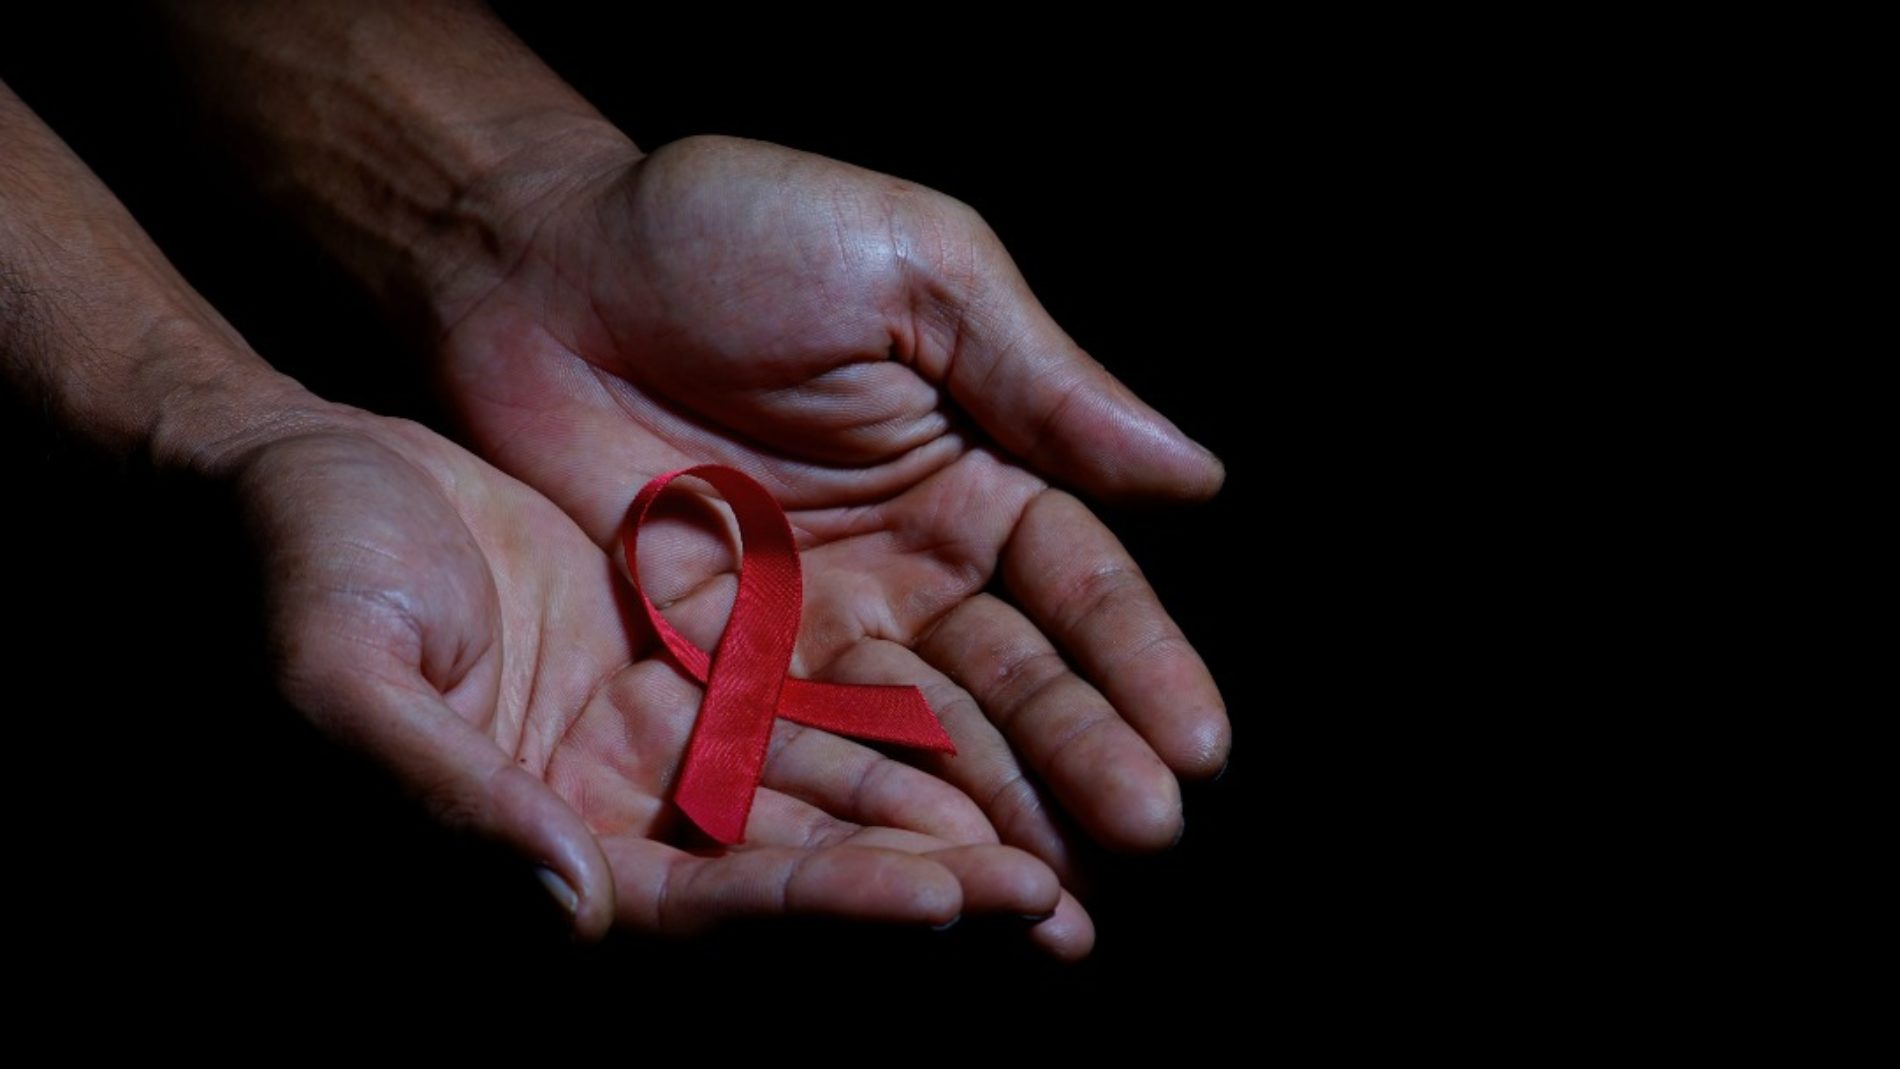 Is Having HIV a Death Sentence?